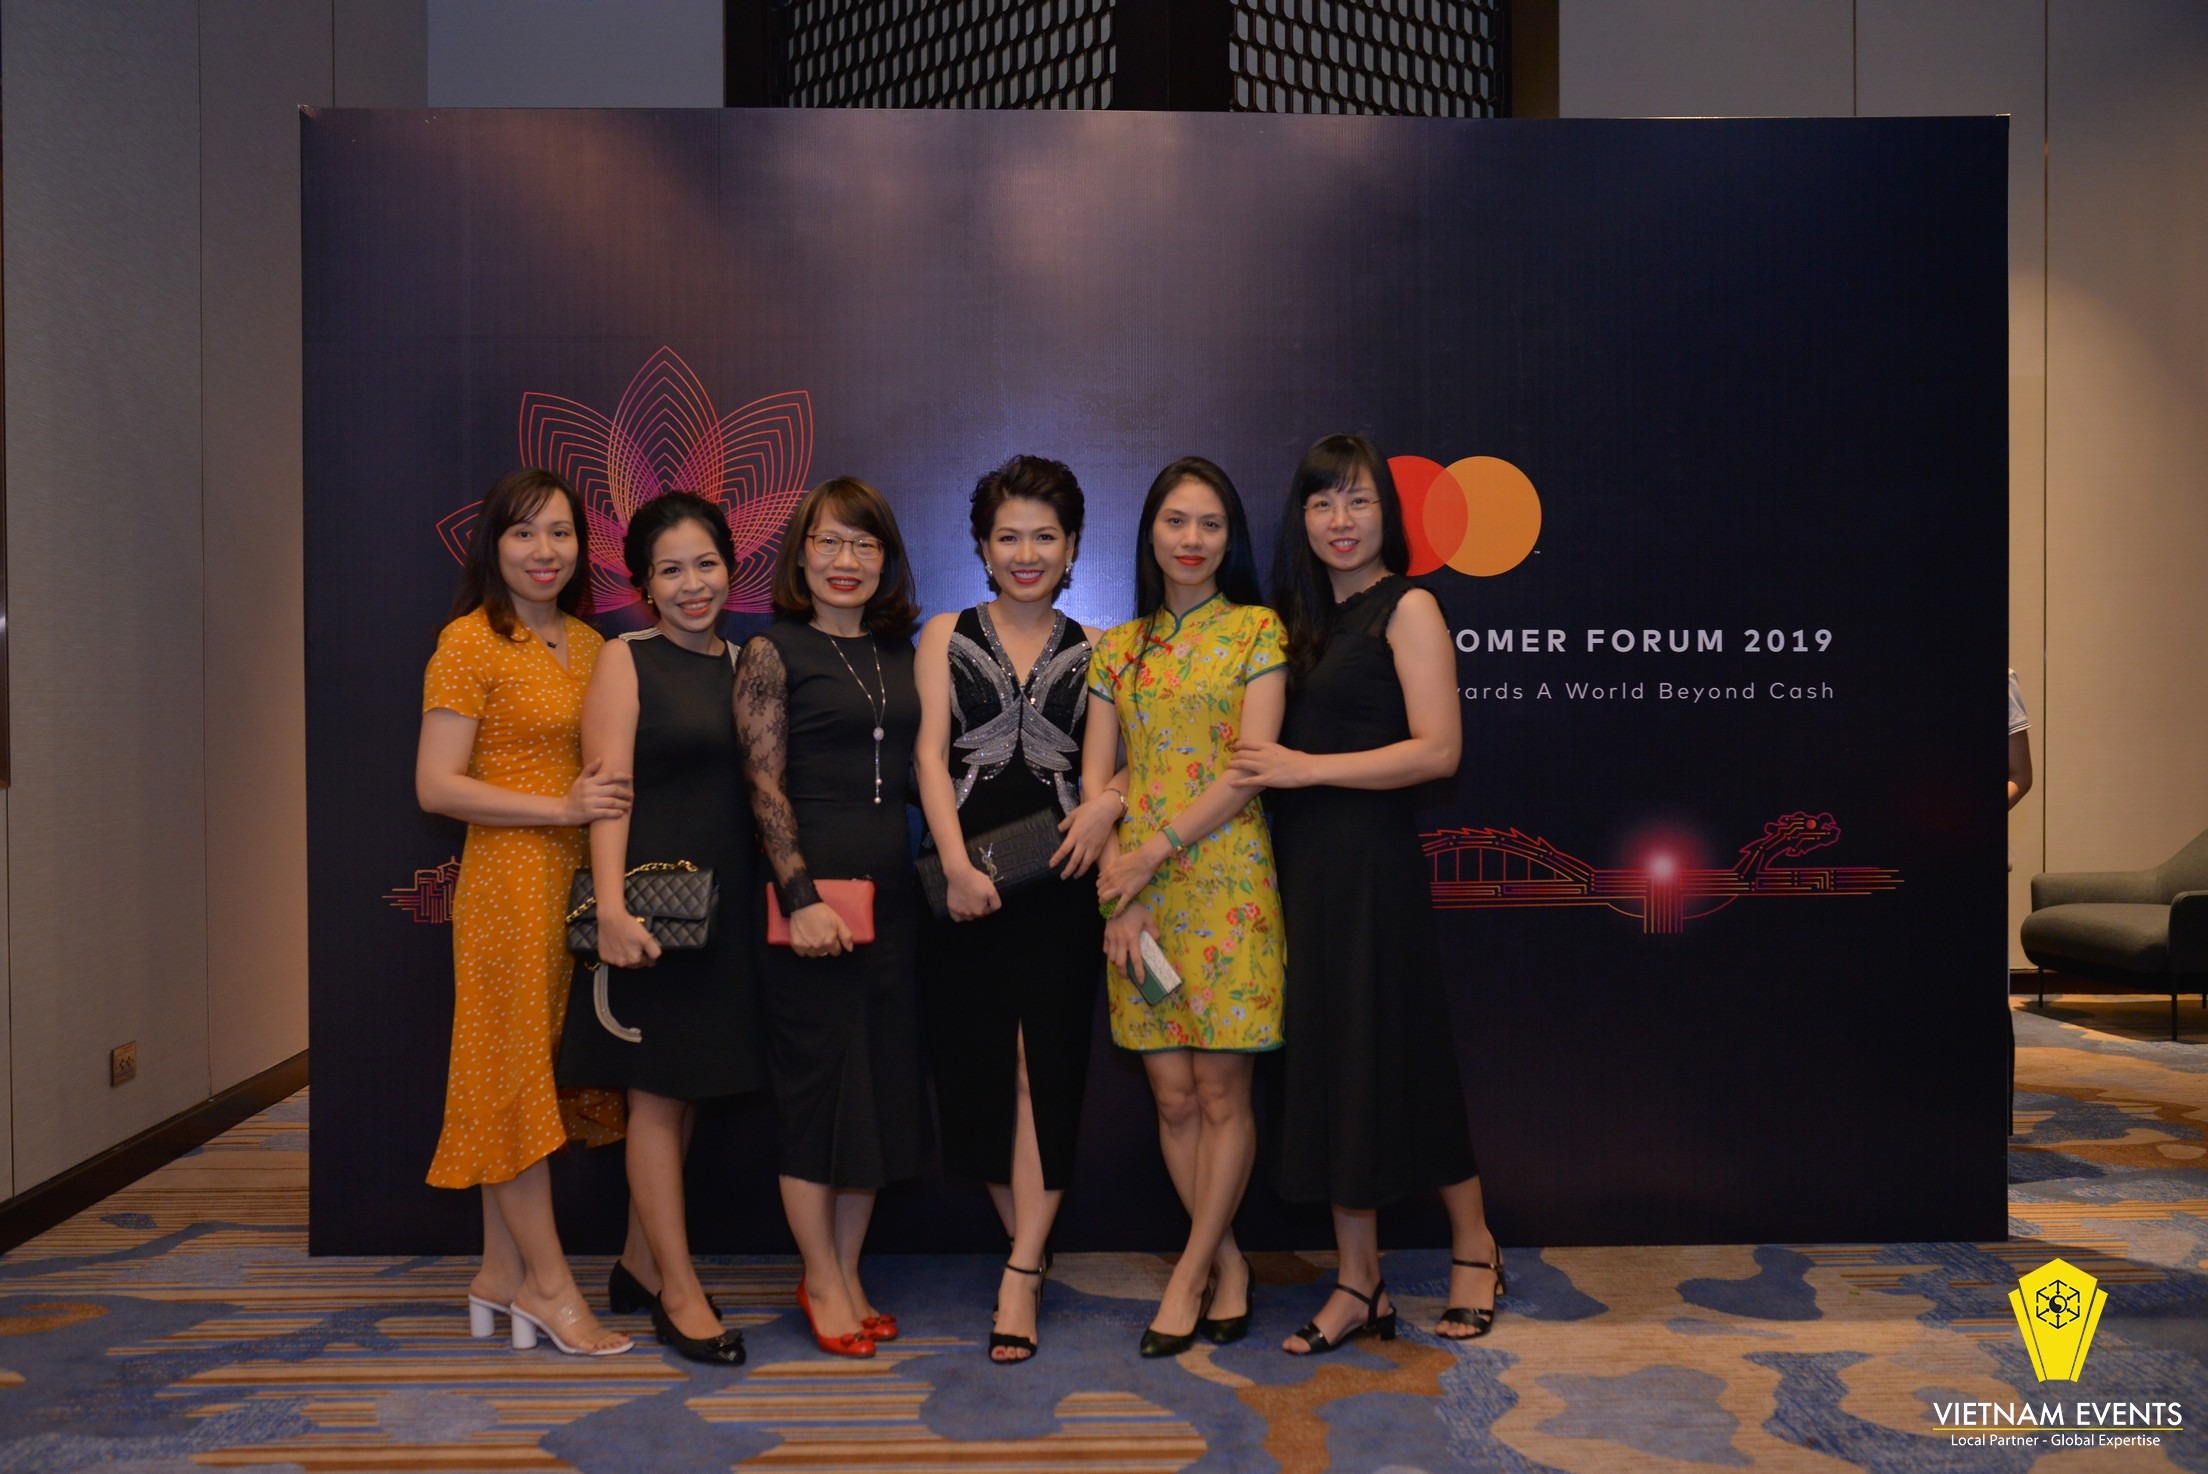 MasterCard- Customer Forum 2019 Hilton Danang